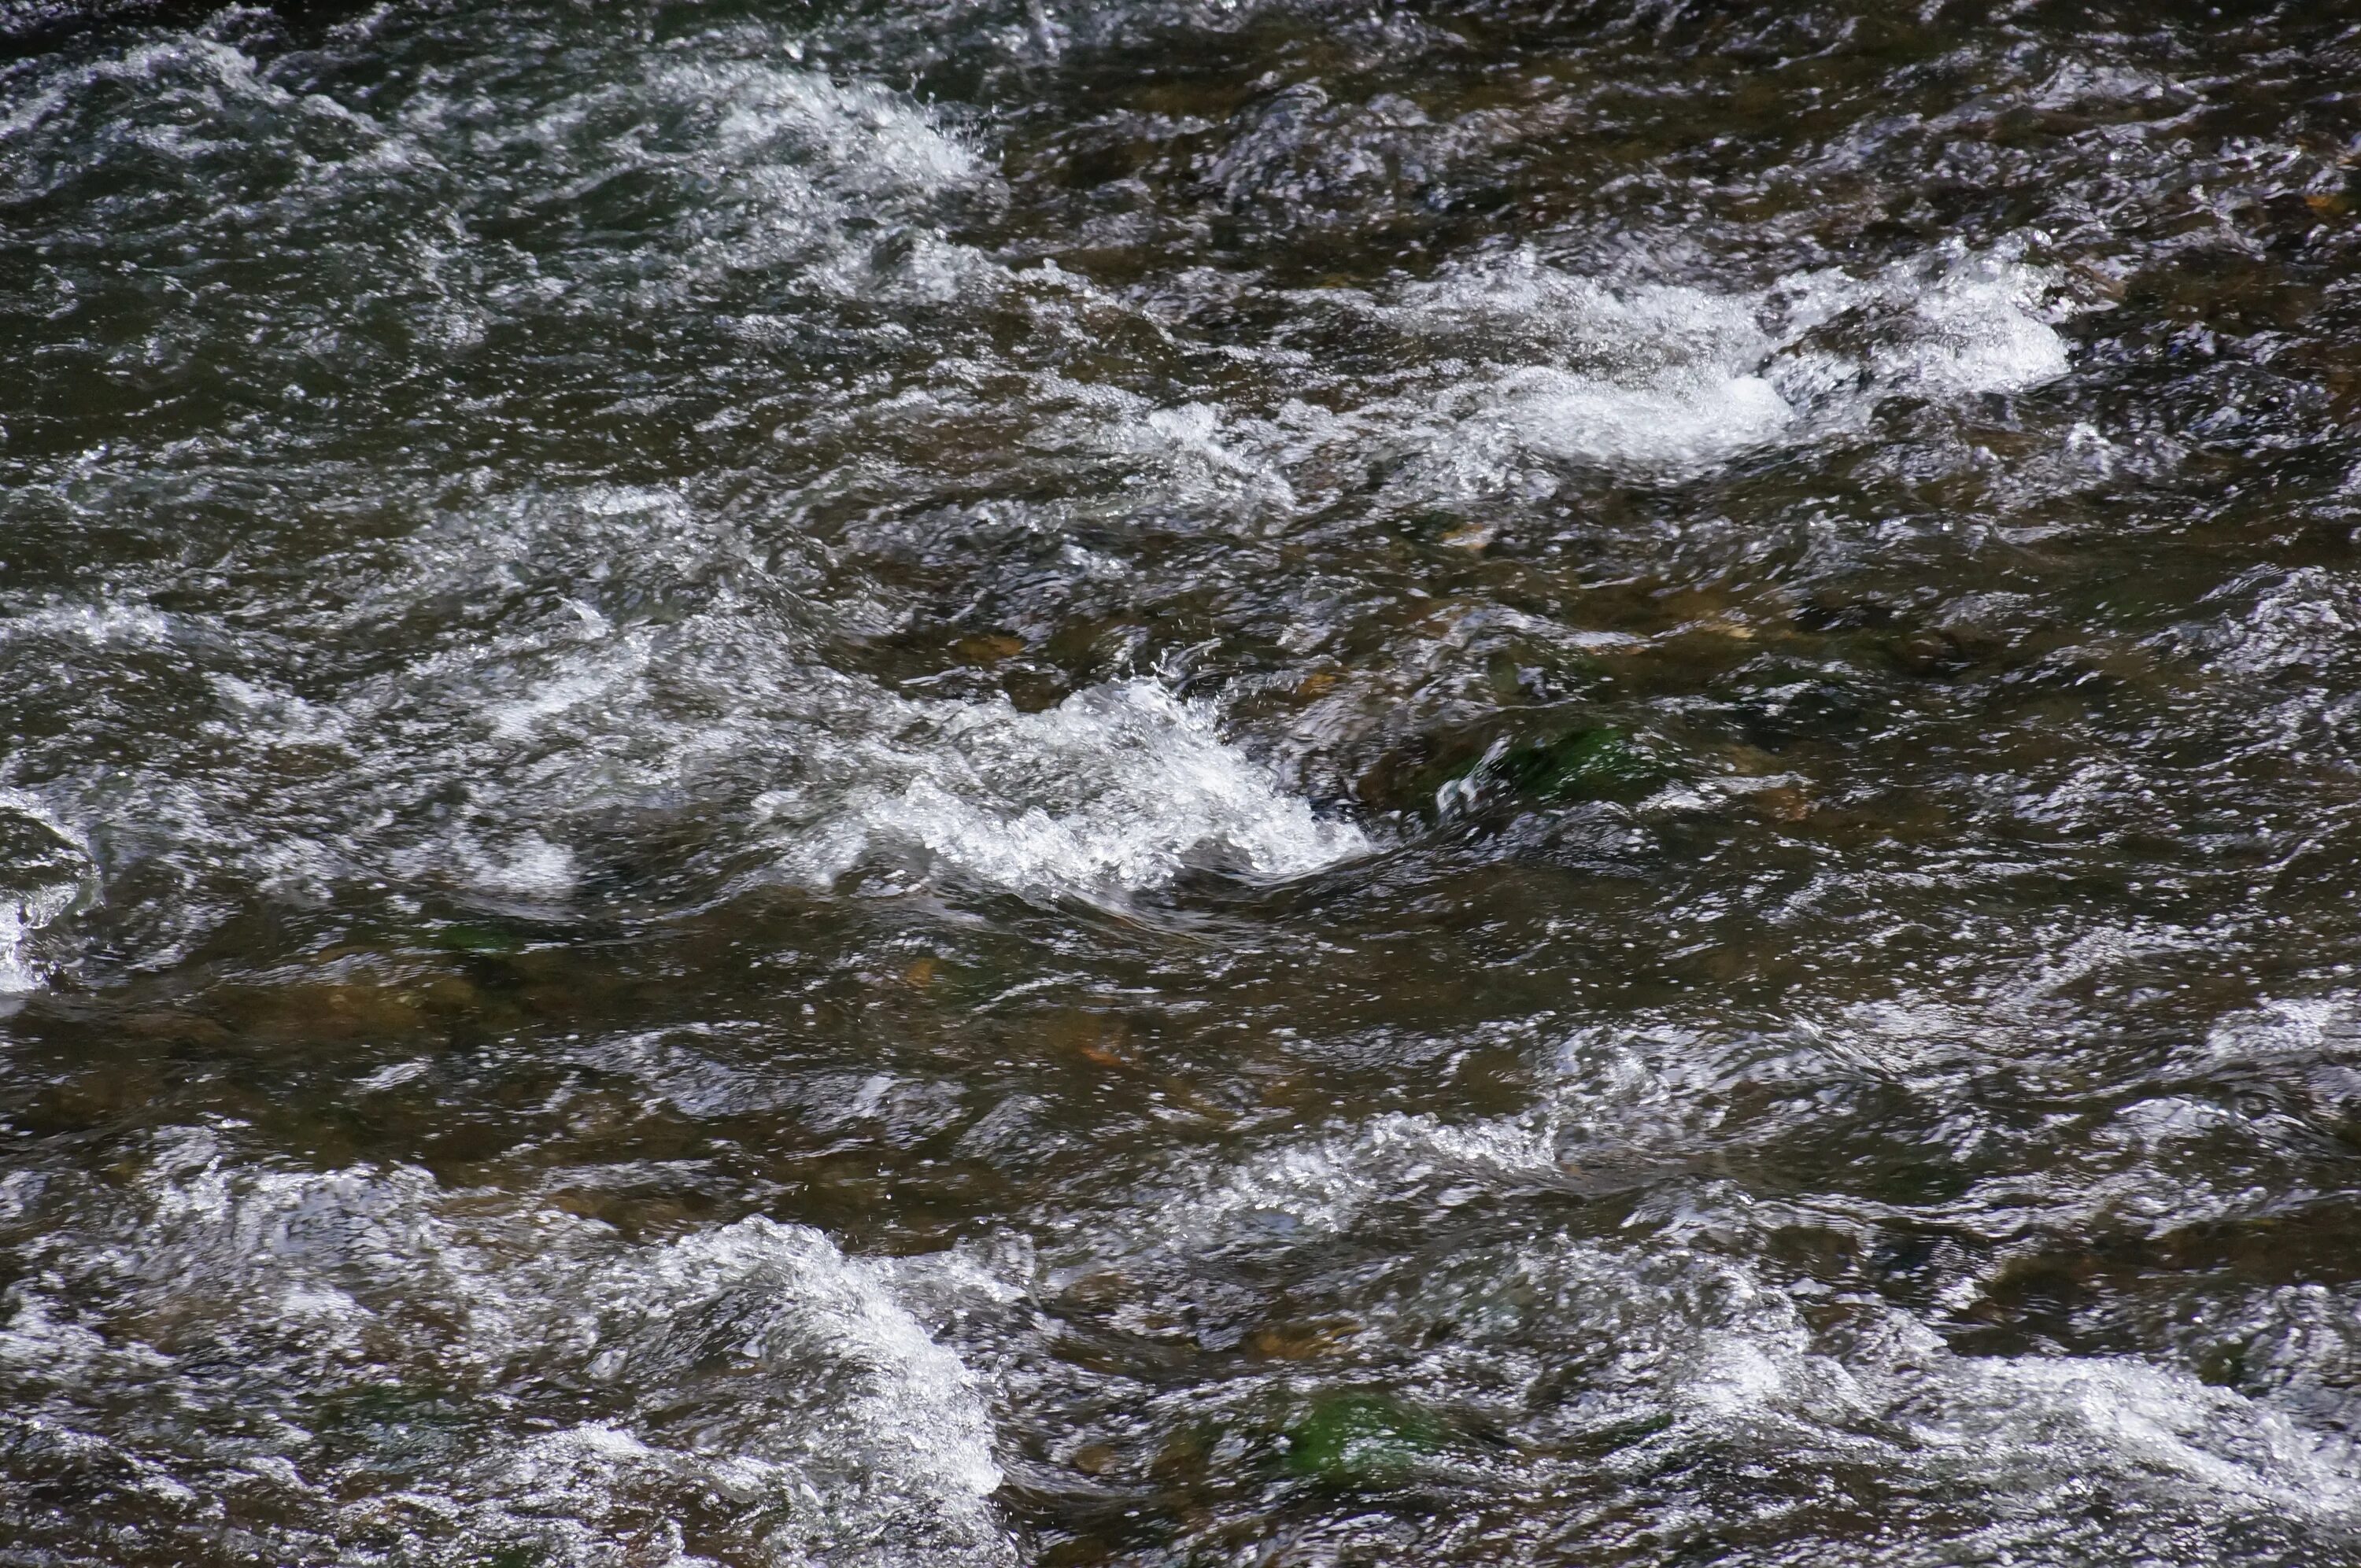 Течение воды. Вода в реке течет. Вода течет River. Движение воды в реке. Река токовая.